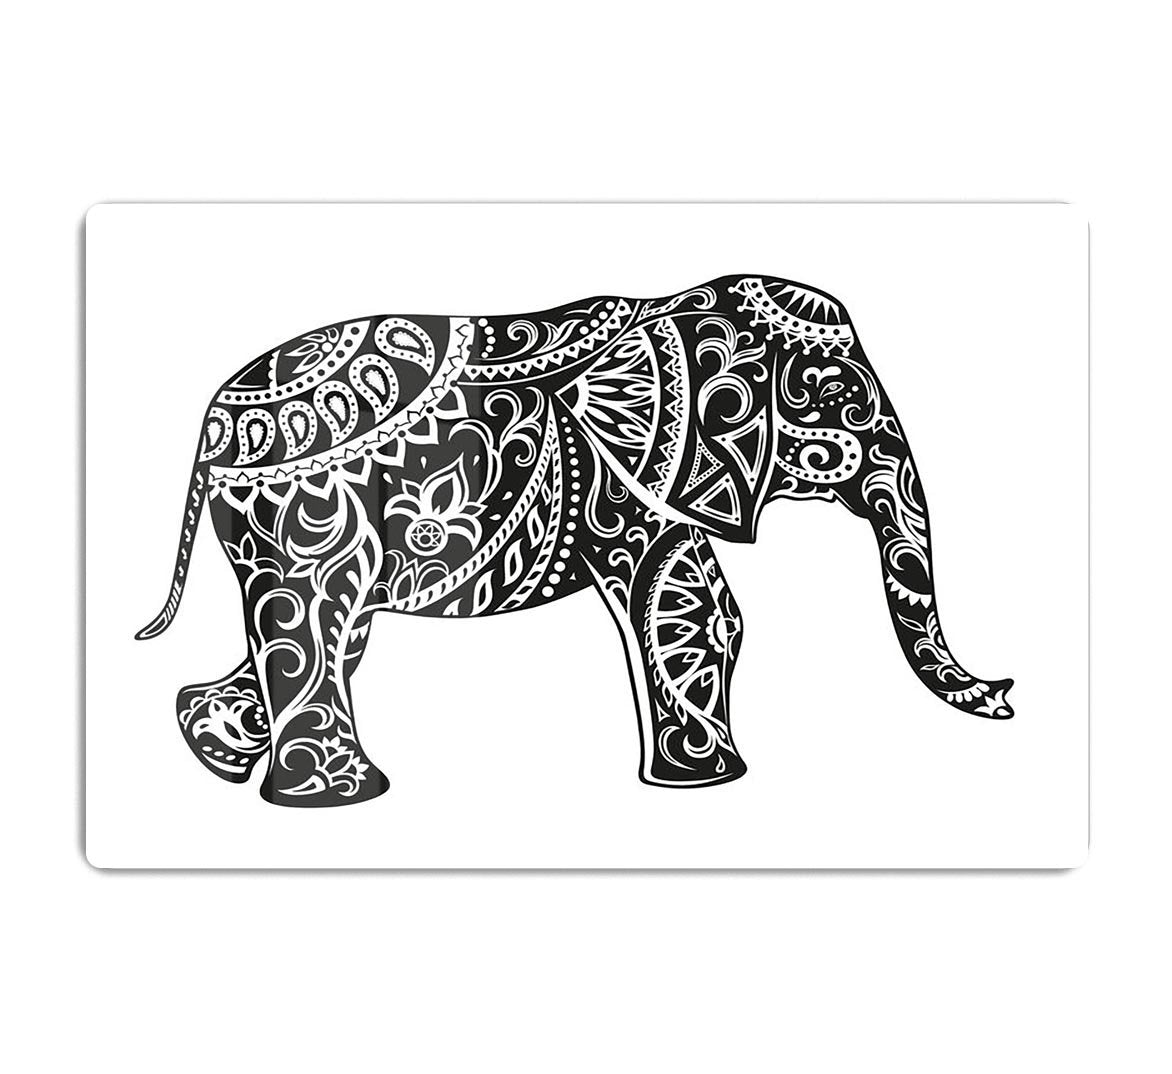 The stylized figure of an elephant in the festive patterns HD Metal Print - Canvas Art Rocks - 1